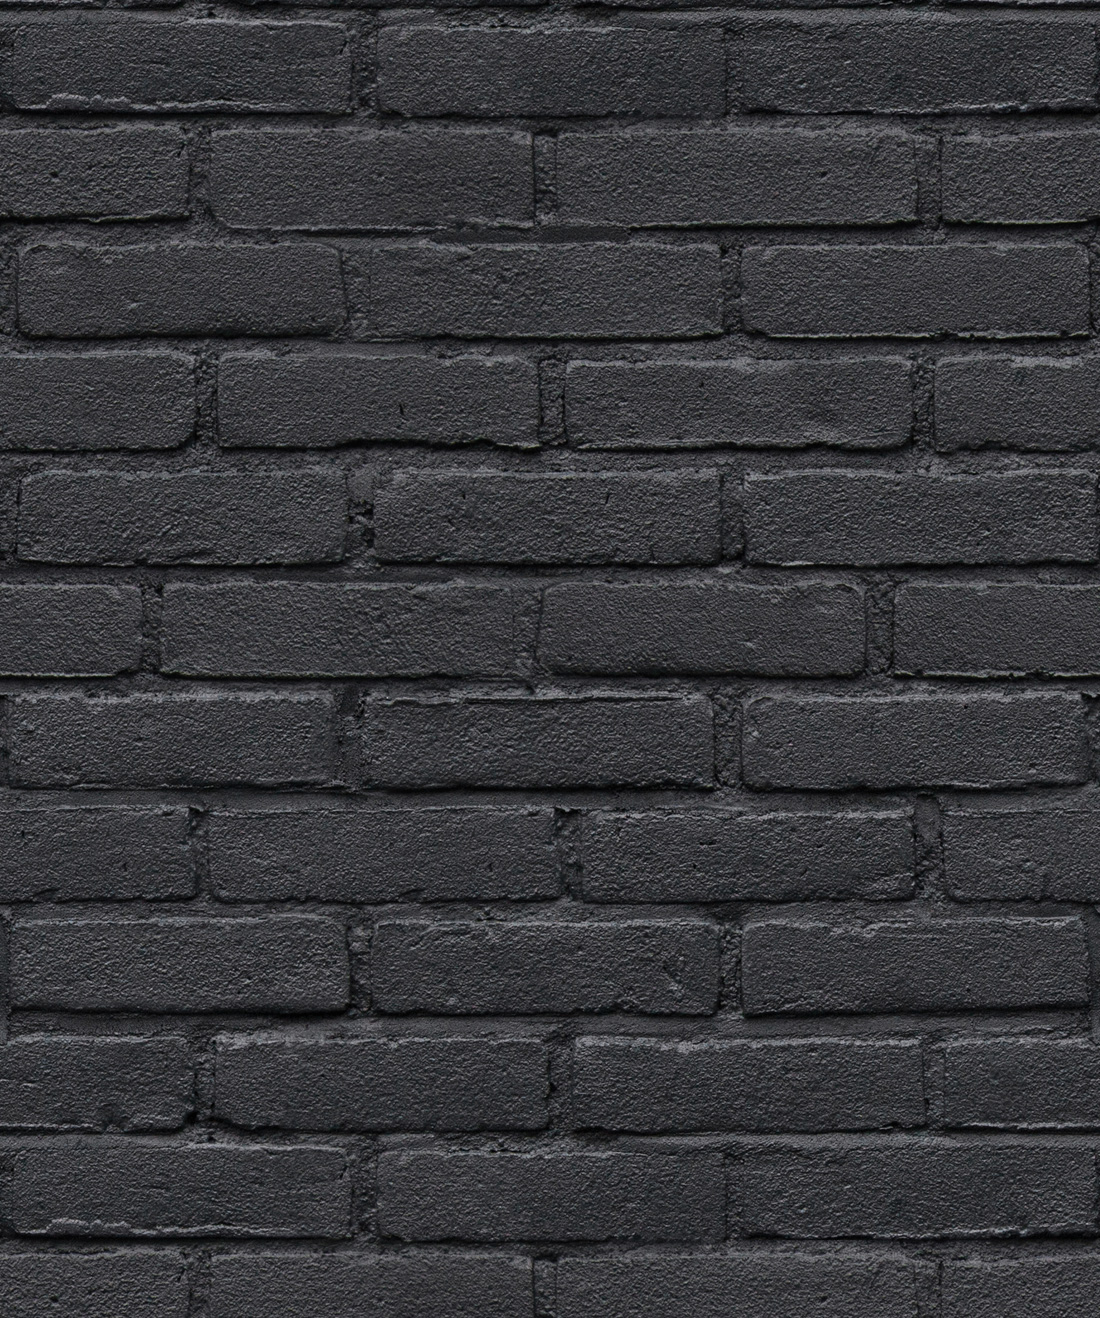 Amsterdam Bricks Wallpaper • Best Black